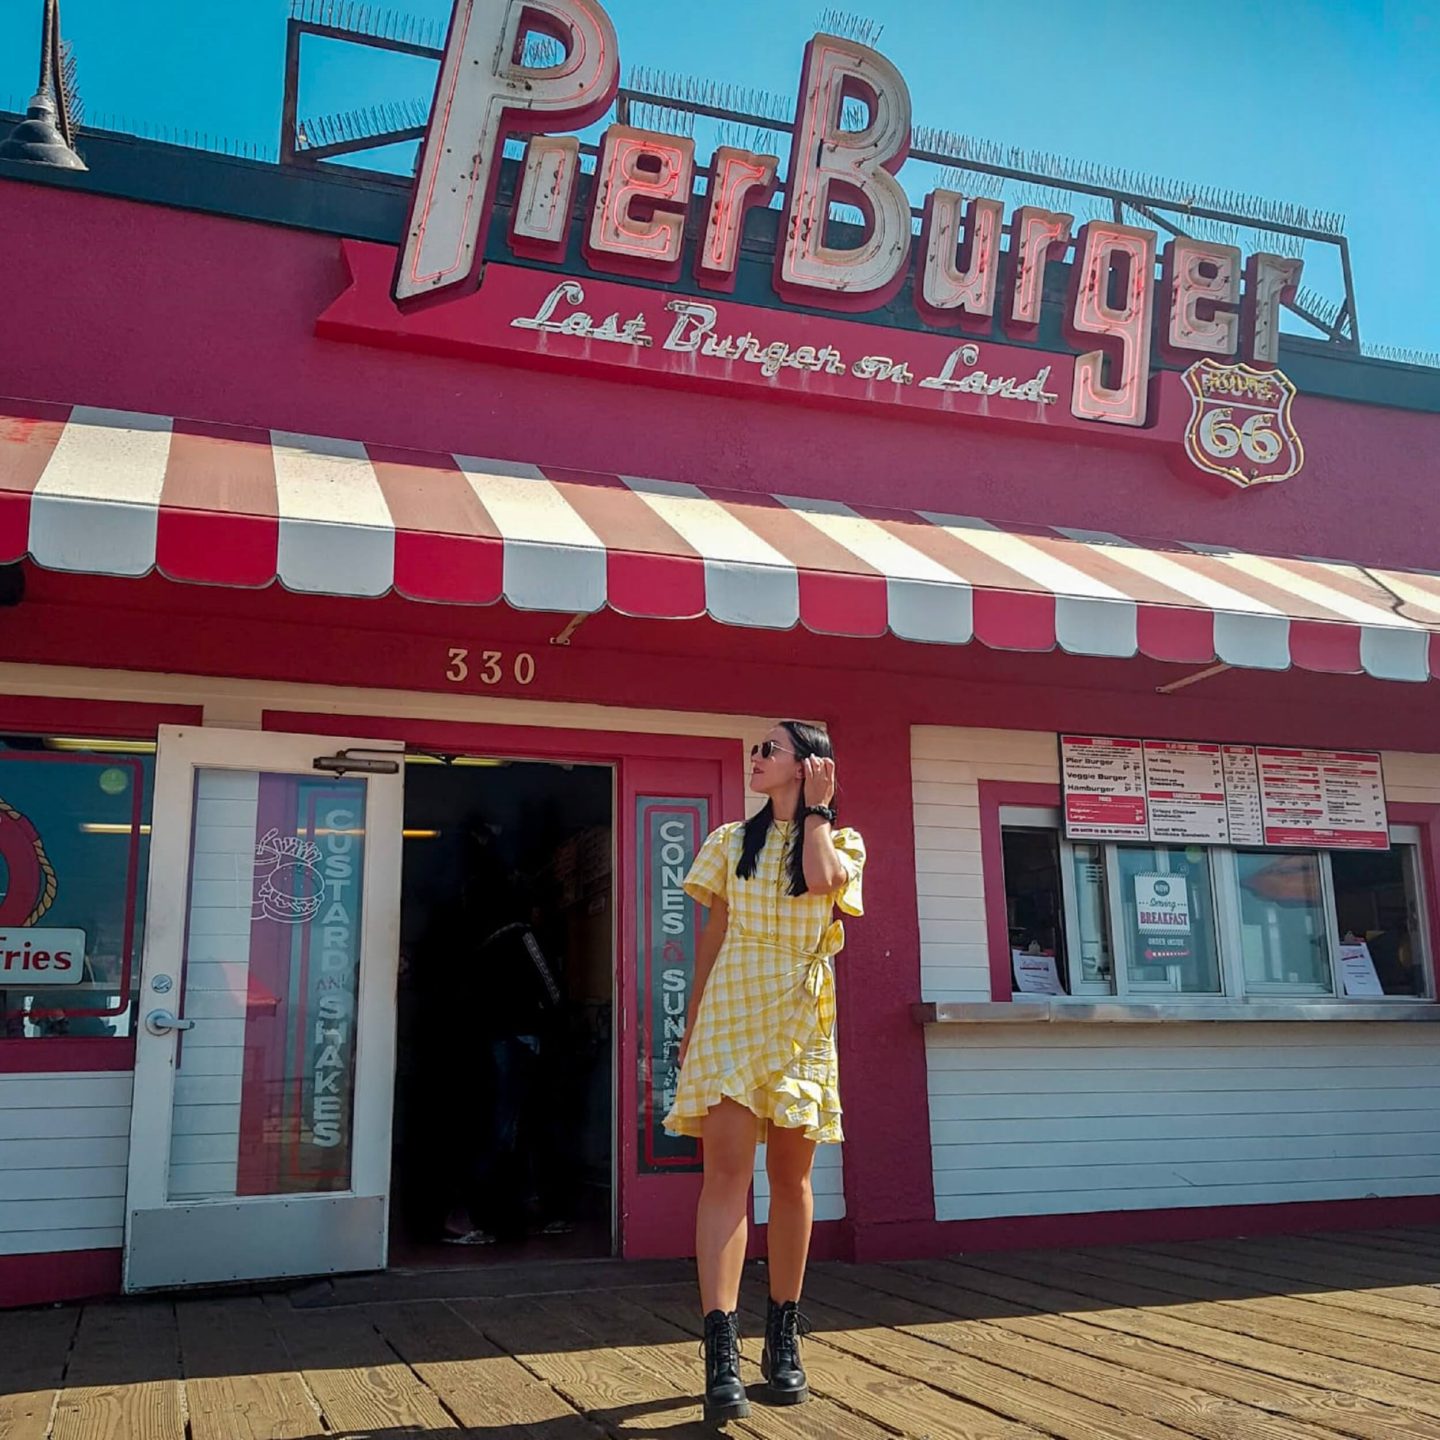 Santa Monica Pier Burger